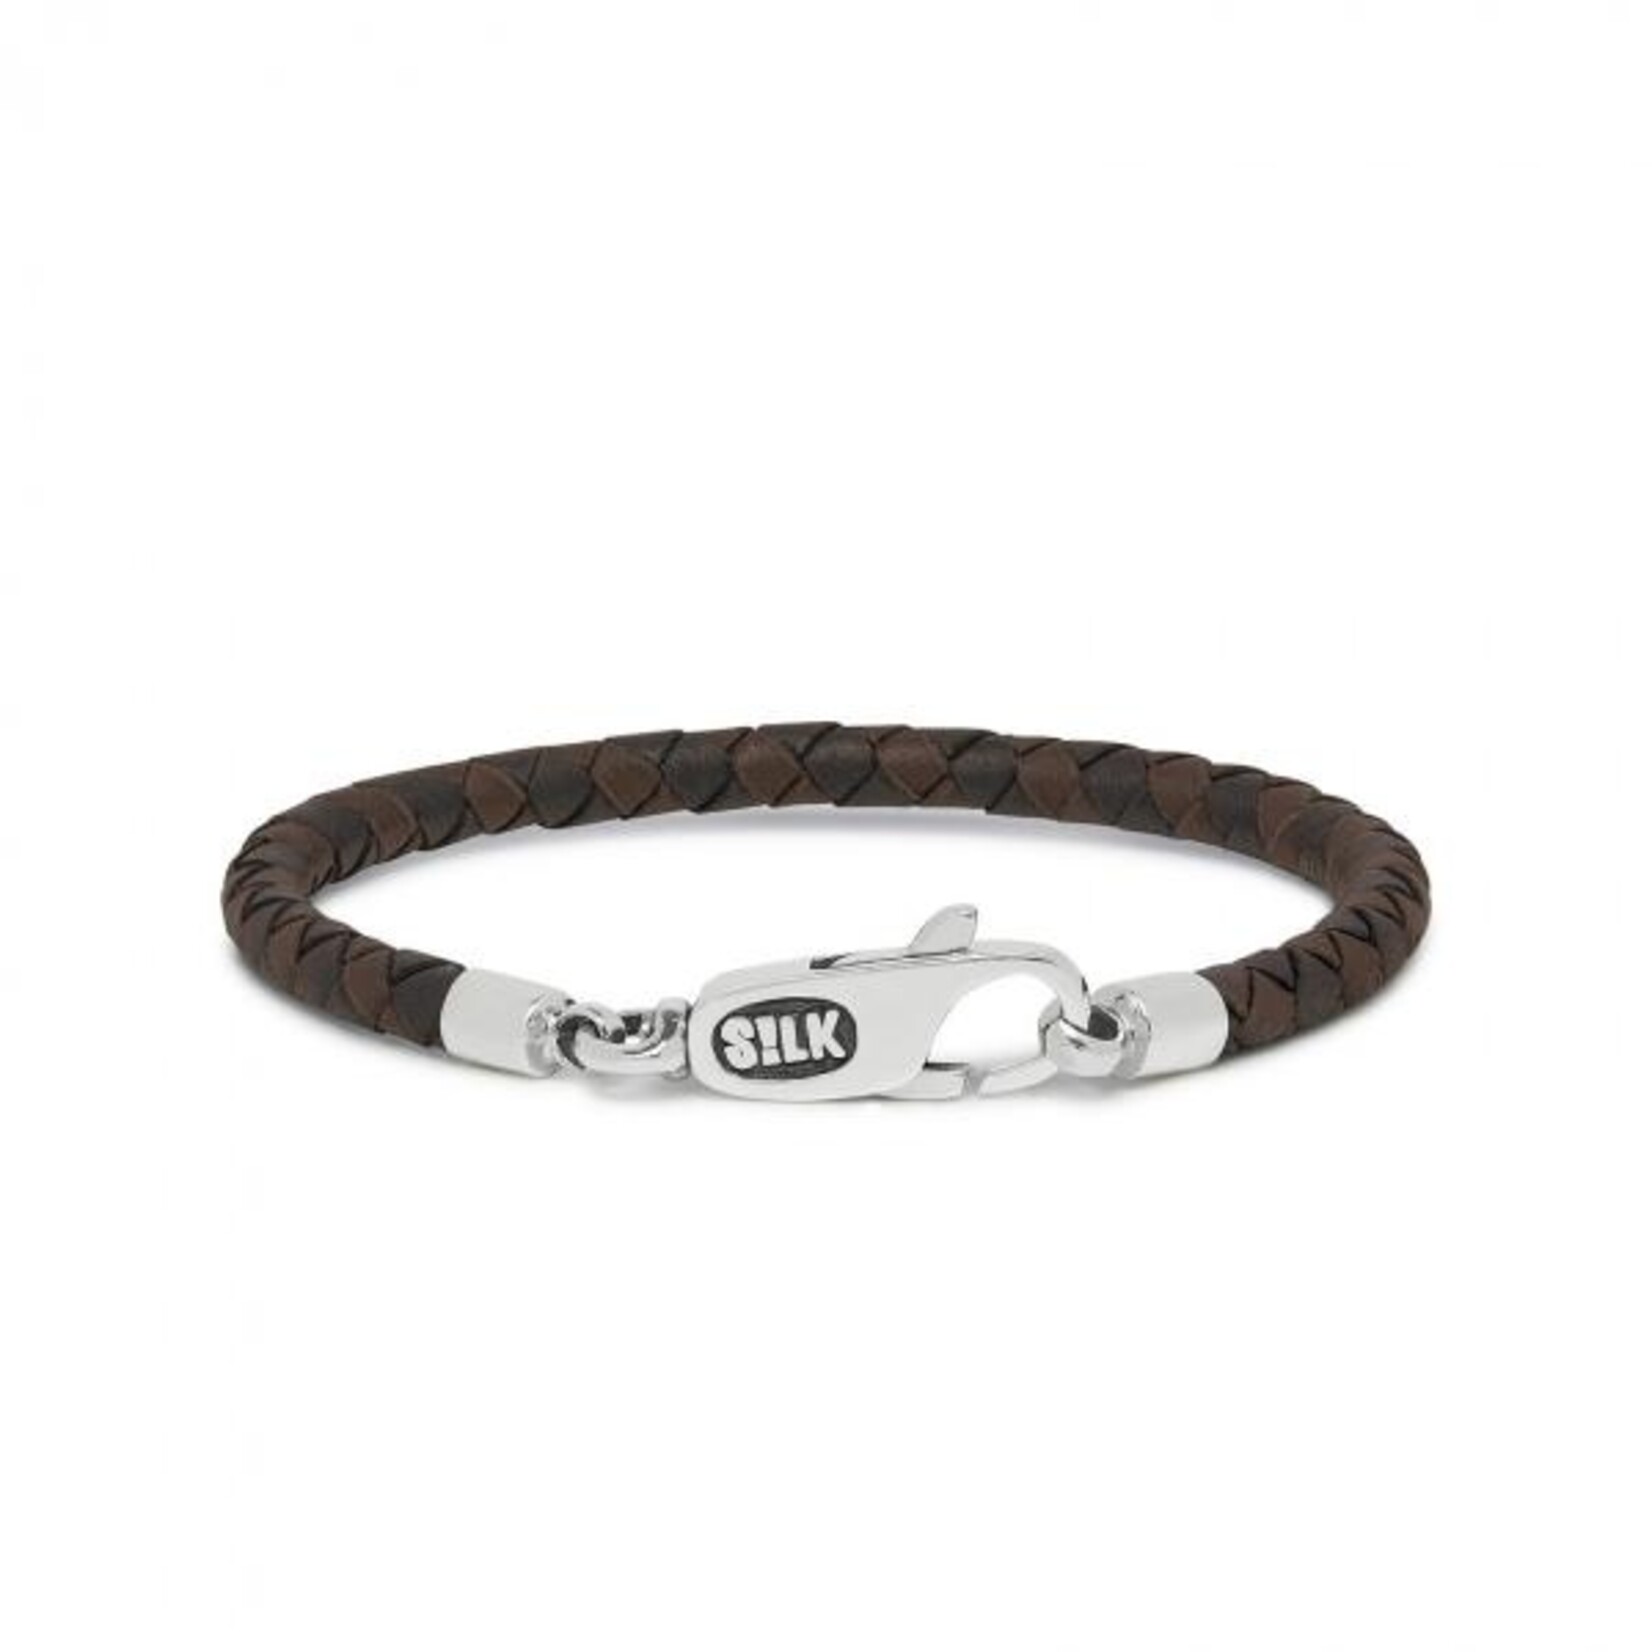 Silk 830bbr armband zwart-bruin